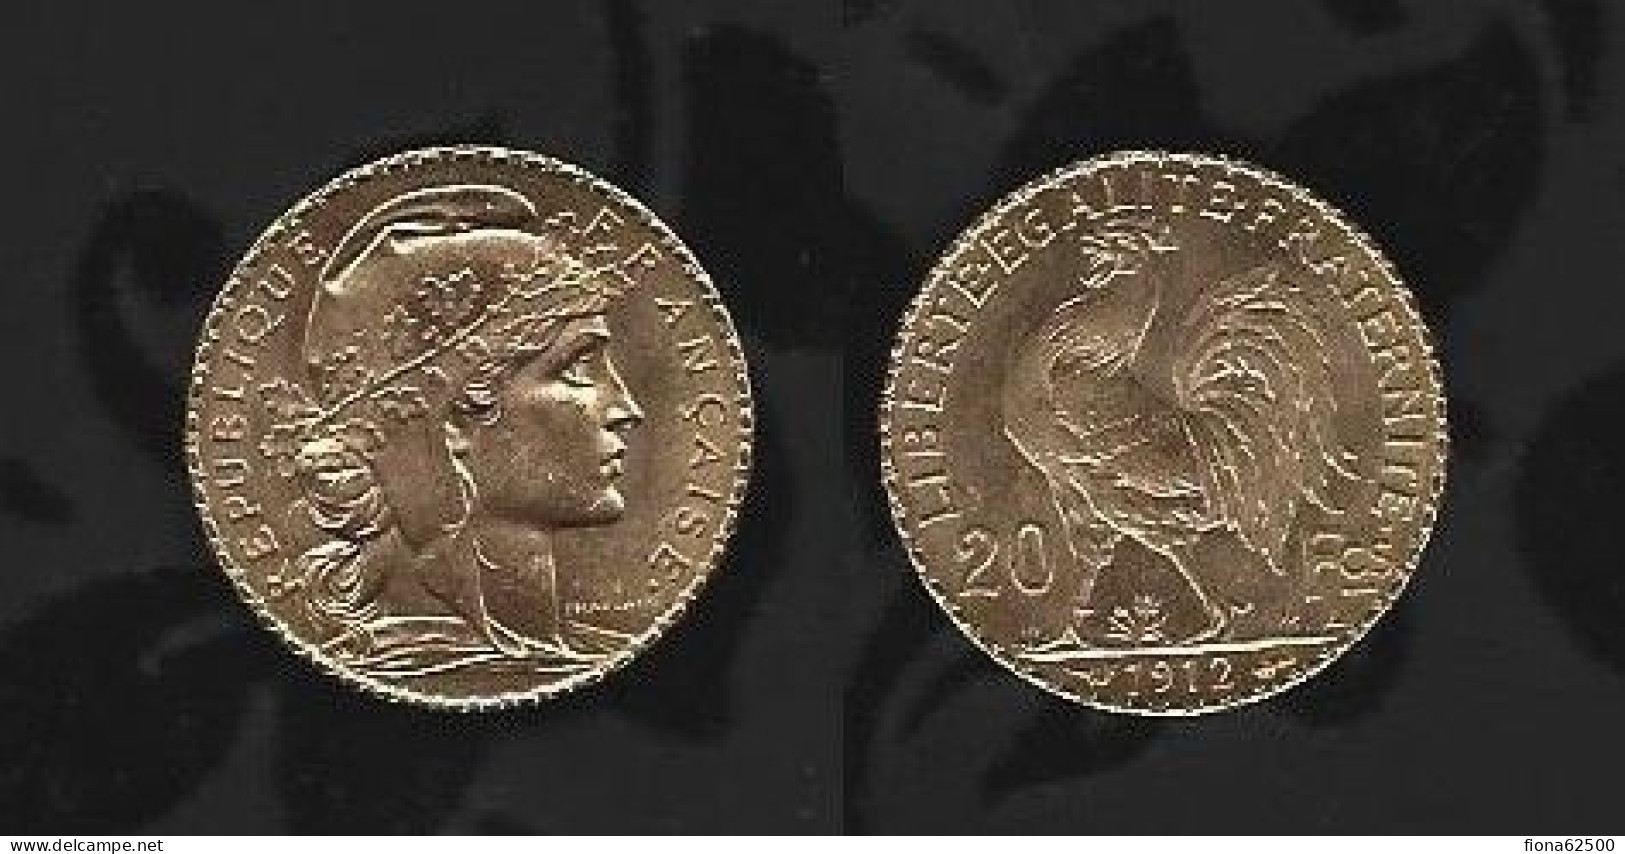 20 FRANCS OR TYPE MARIANNE . 1912. - 20 Francs (or)